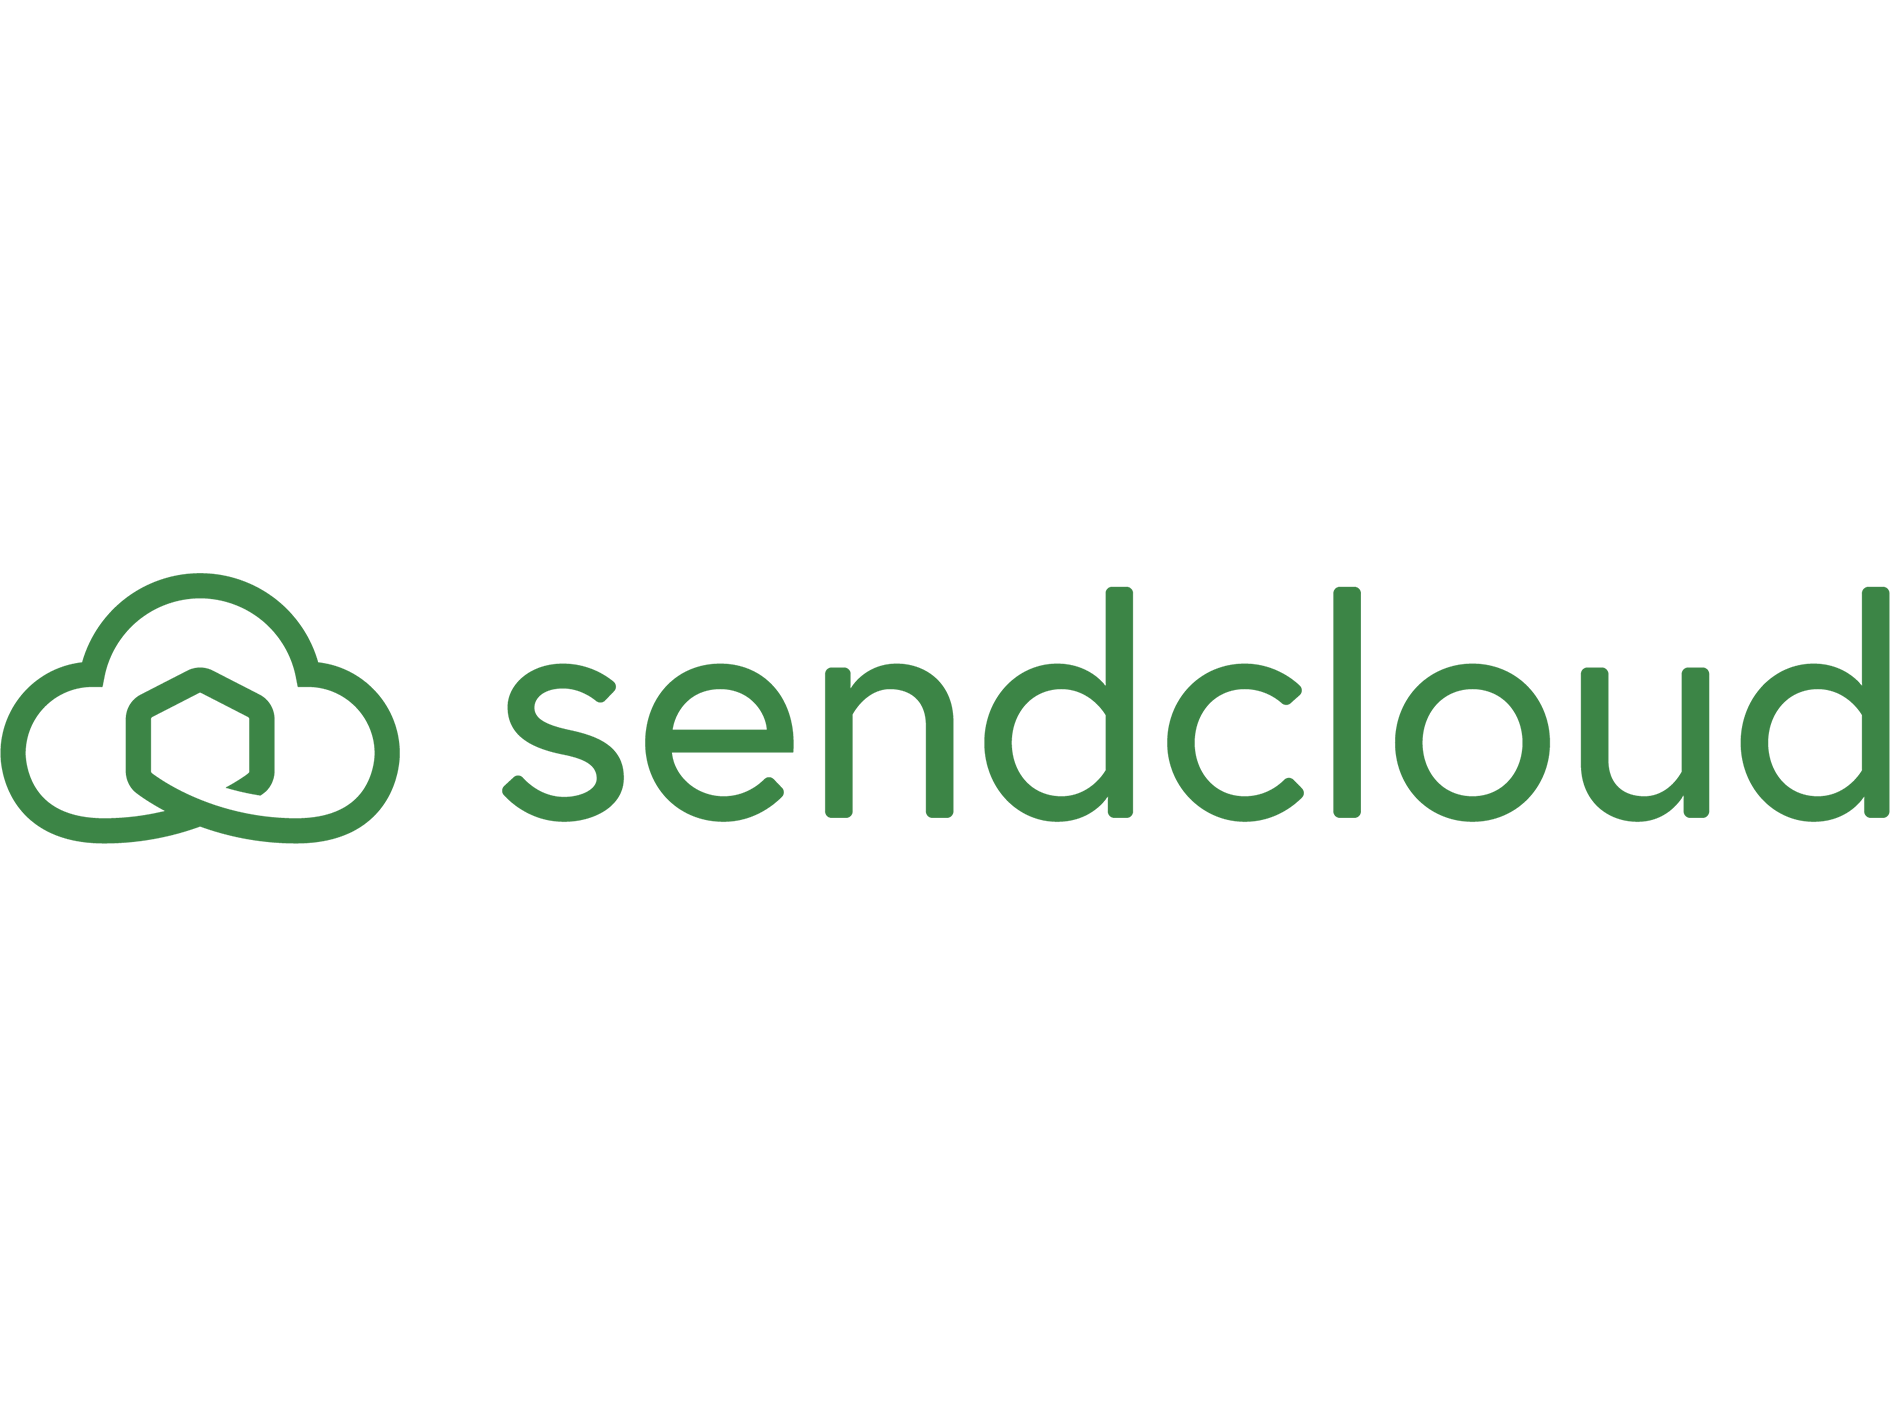 Sendcloud